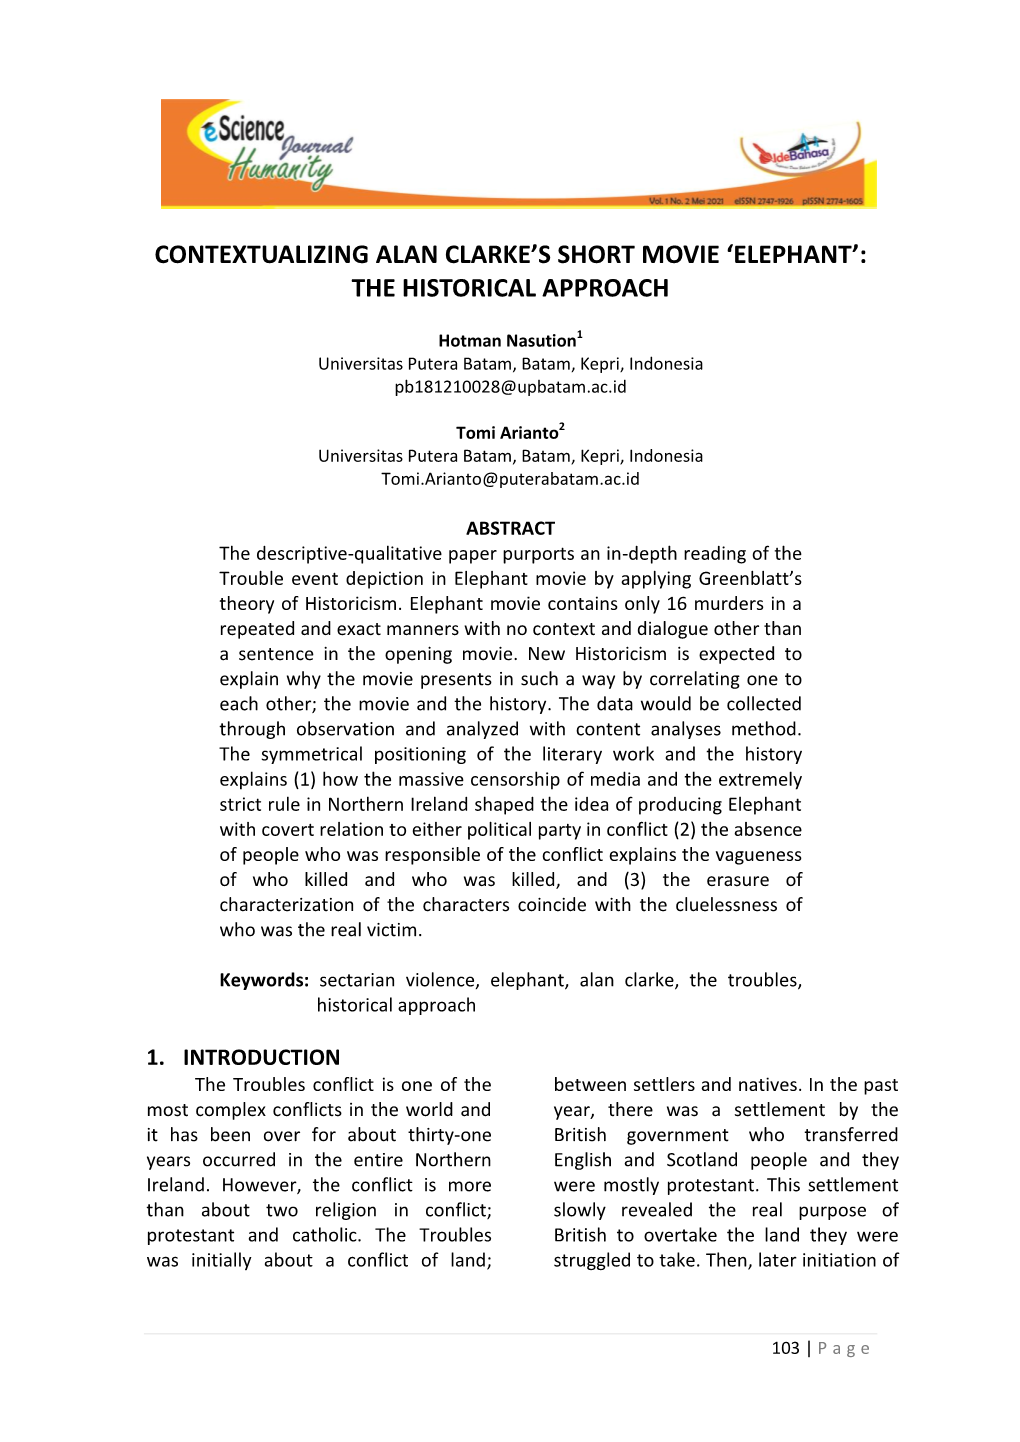 Contextualizing Alan Clarke's Short Movie 'Elephant': The